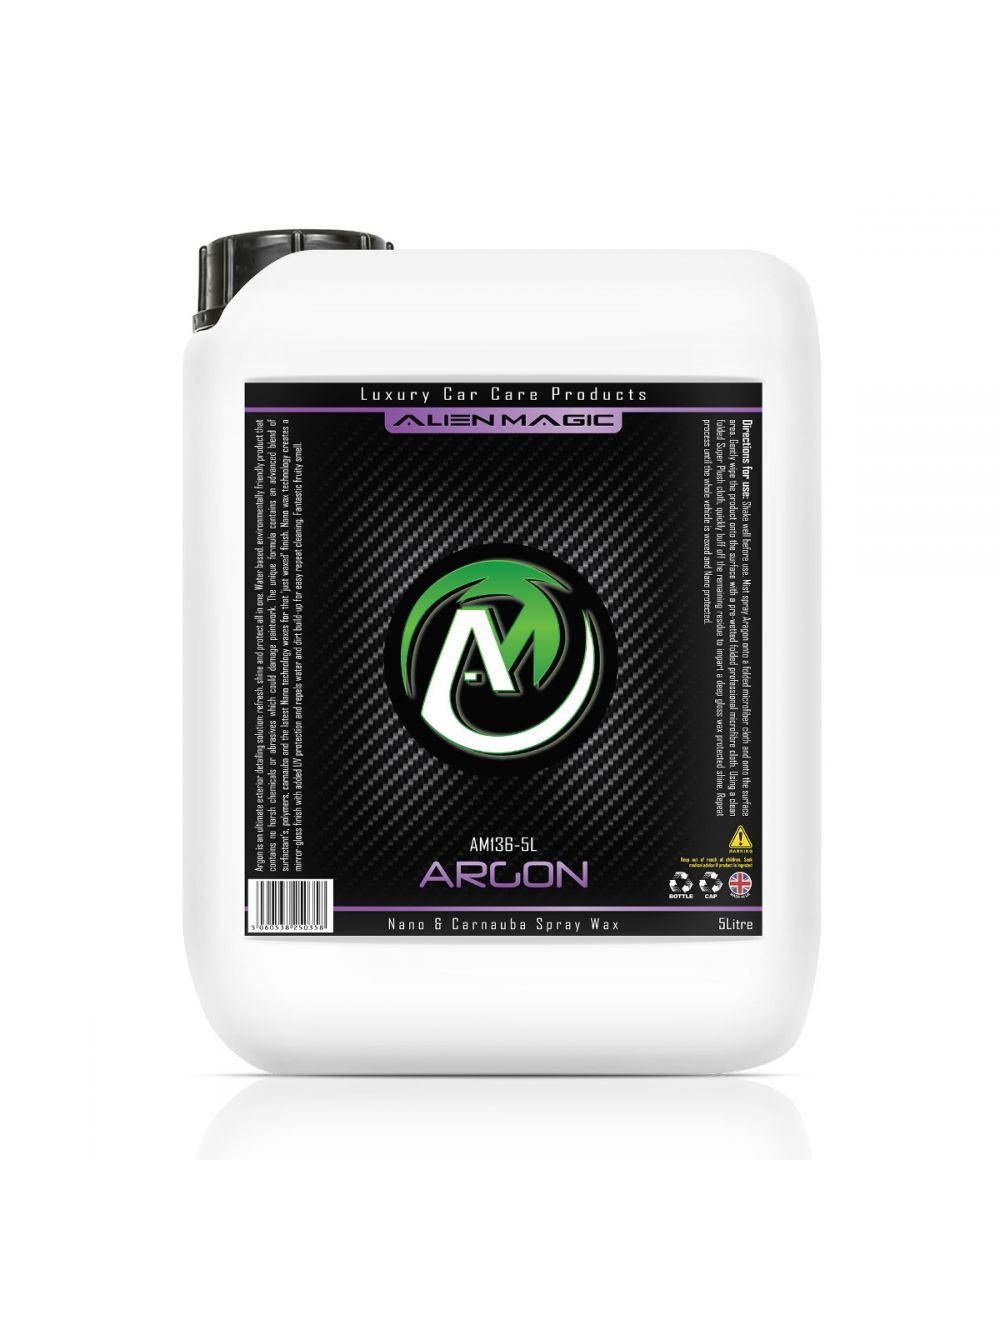 Argon Nano & Carnauba Spray Wax Alien Magic Luxembourg